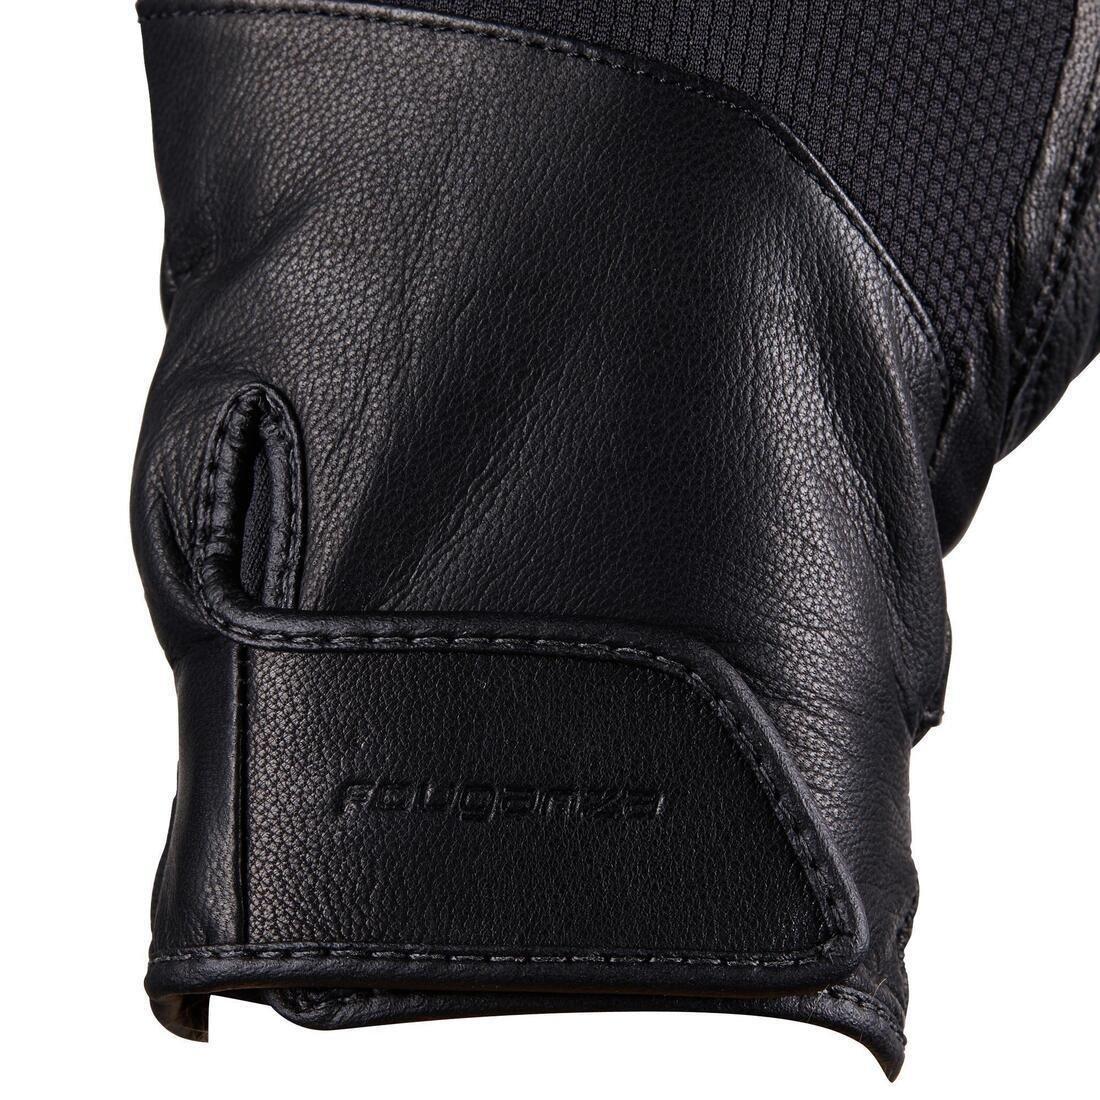 FOUGANZA - Men Gloves 960, Black�